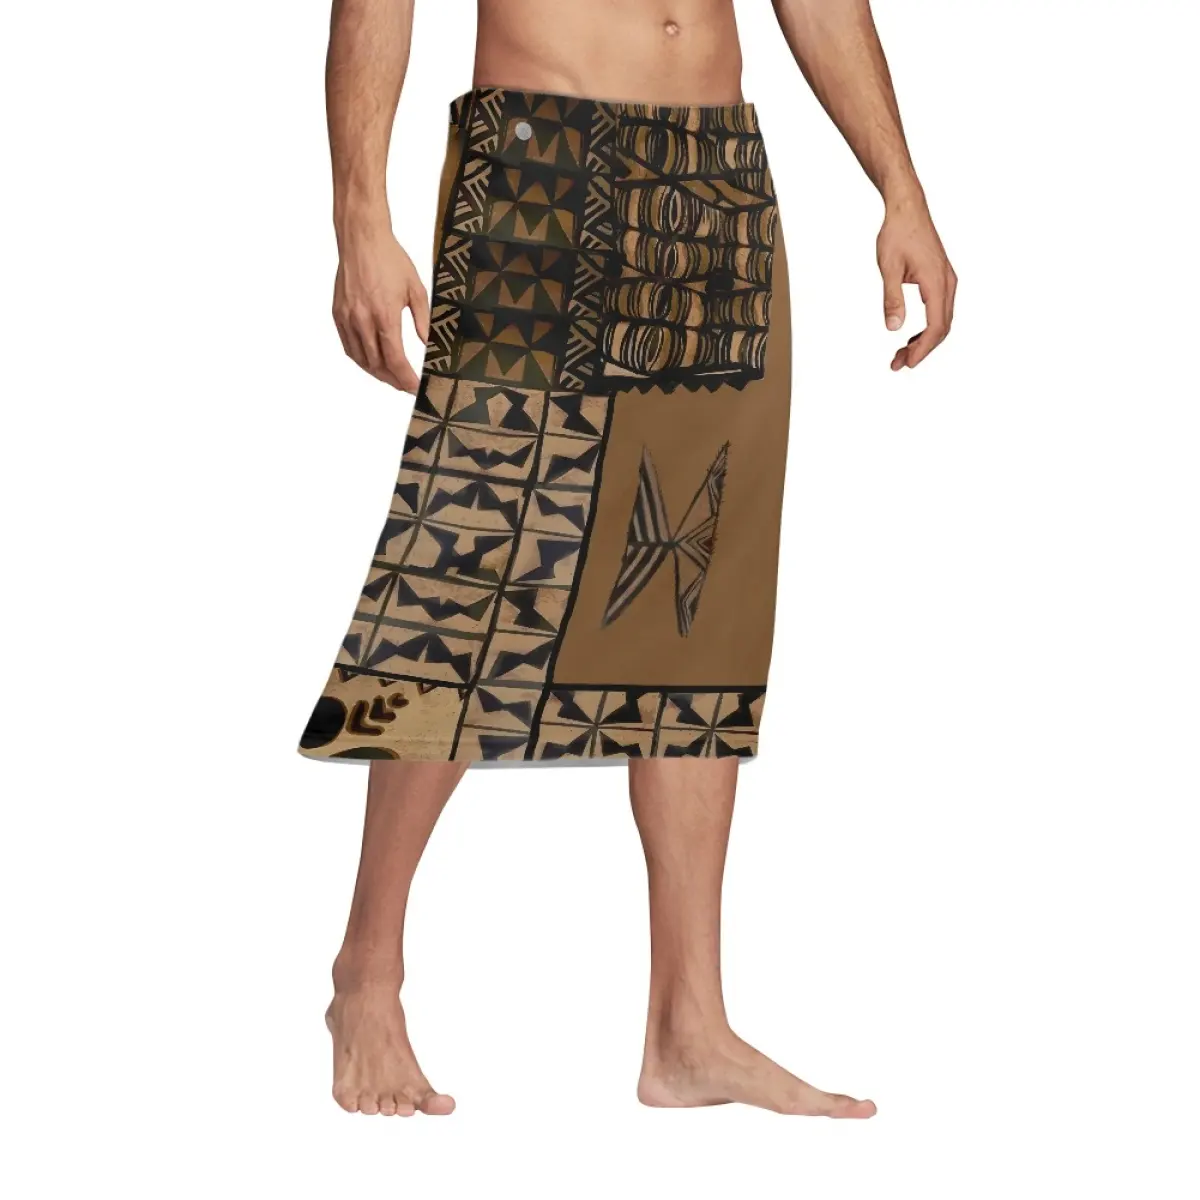 Vestido havaiano estilo tribo africano direto da fábrica, roupa casual masculina fantasia, vestido envoltório estampado sob demanda, saia havaiana respirável